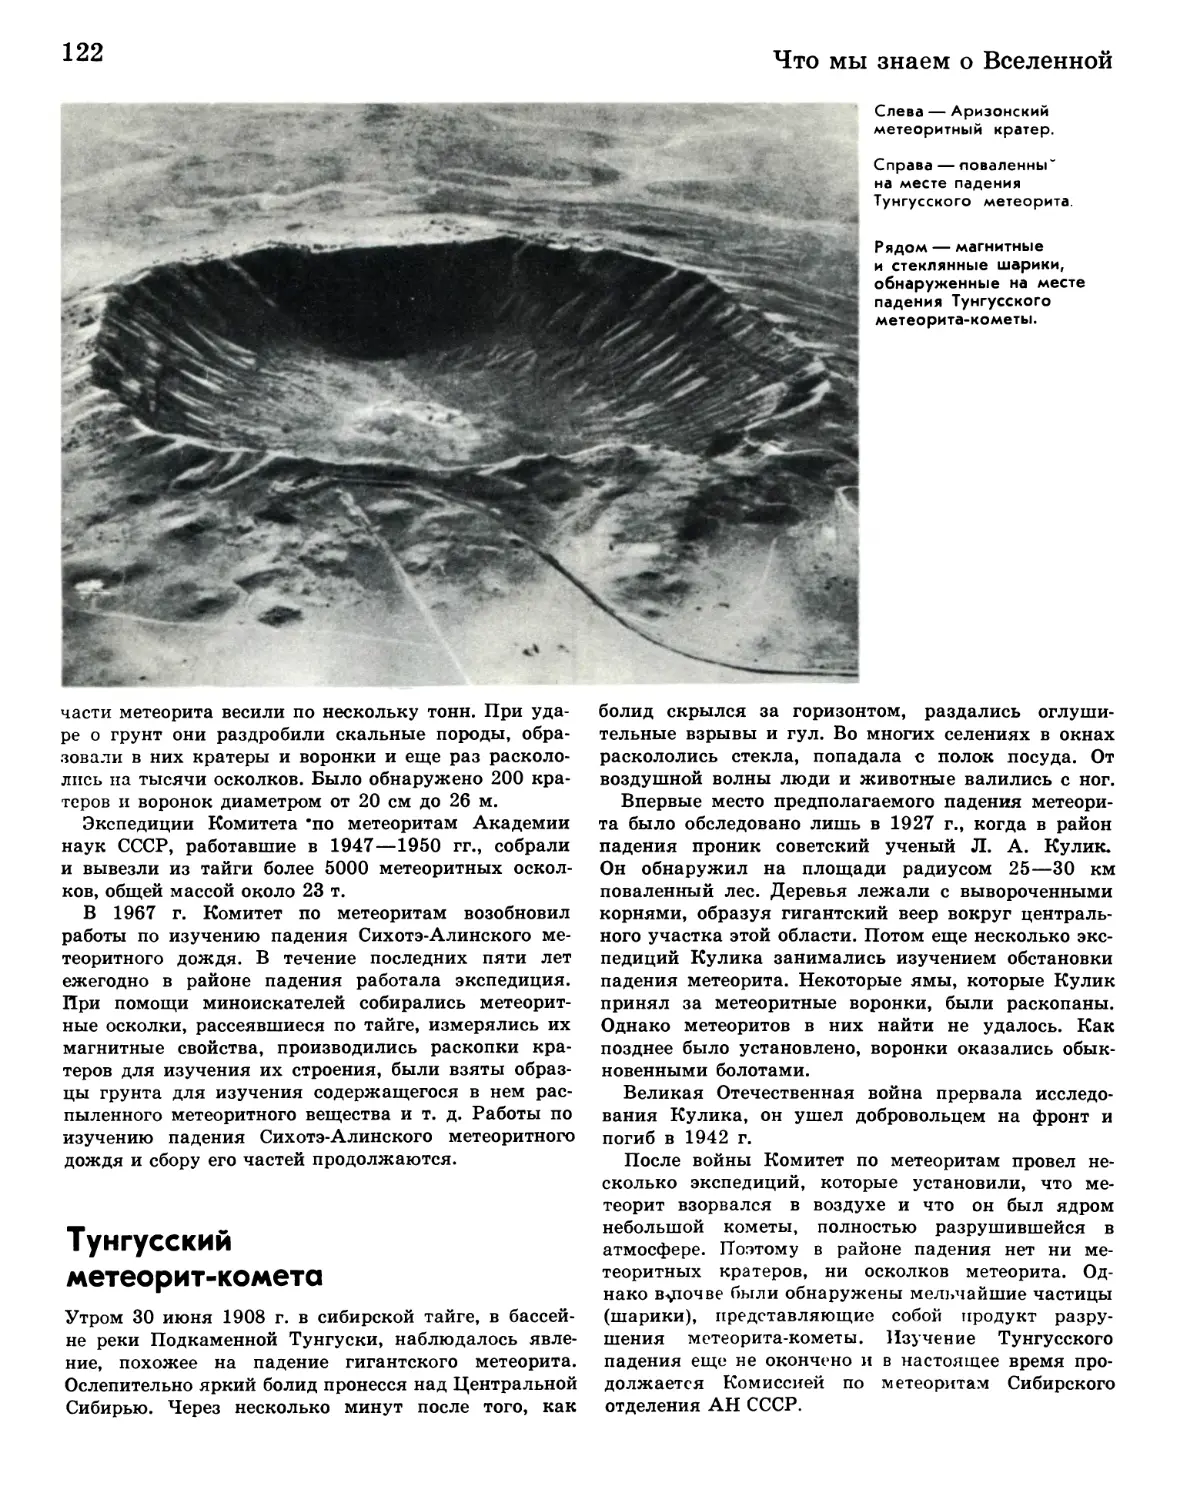 Тунгусский метеорит-комета